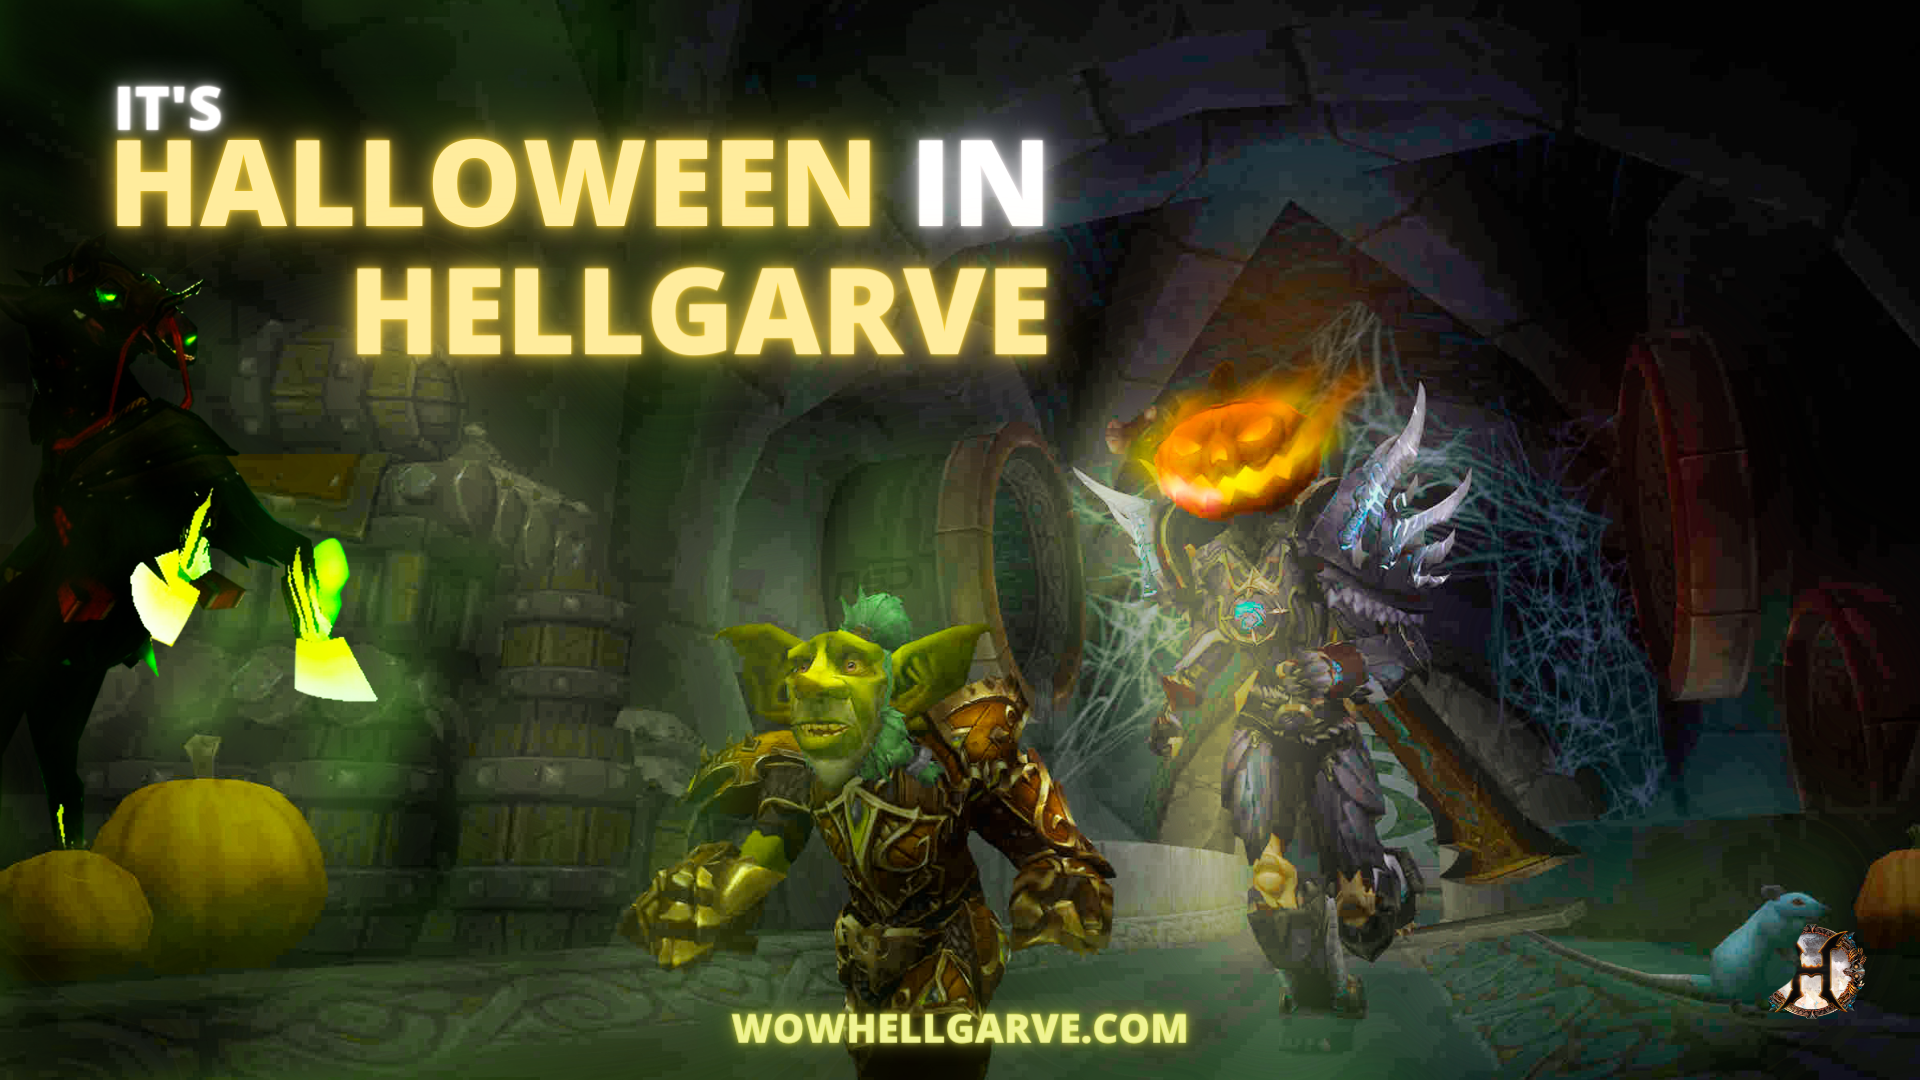 Halloween has come to Hellgarve!